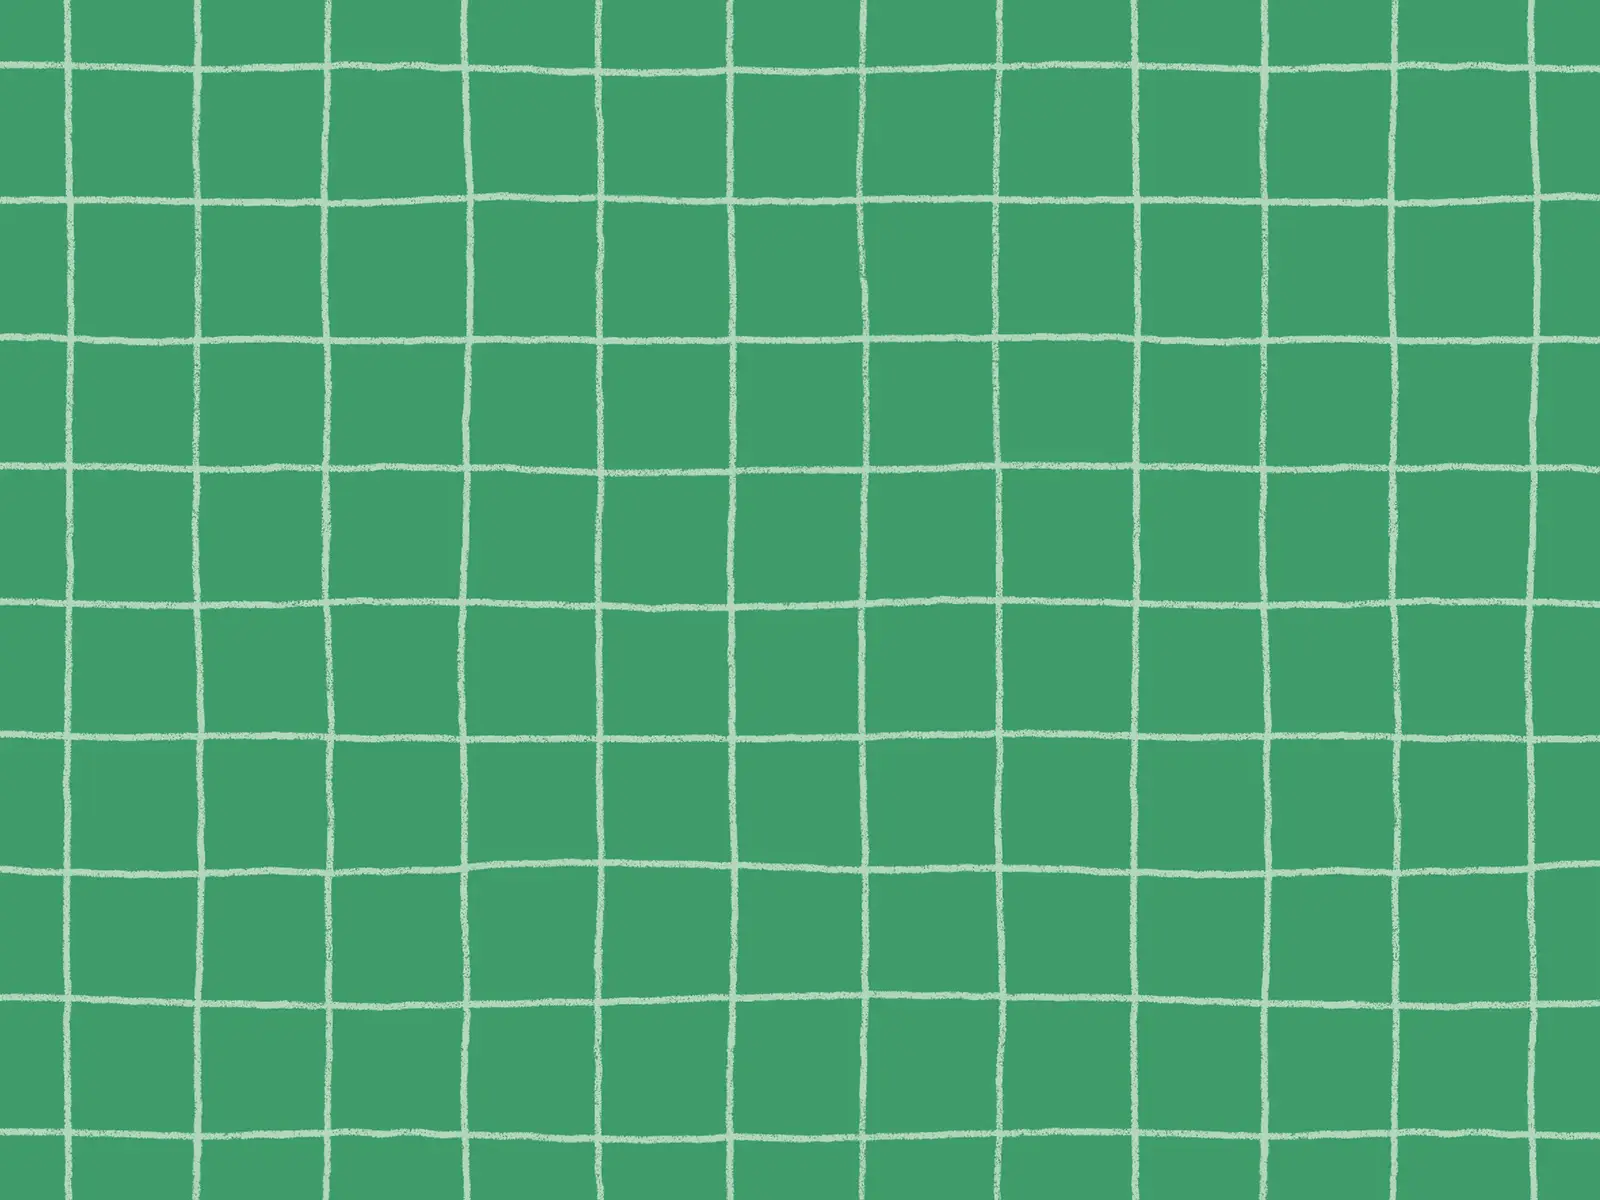 Green grid pattern